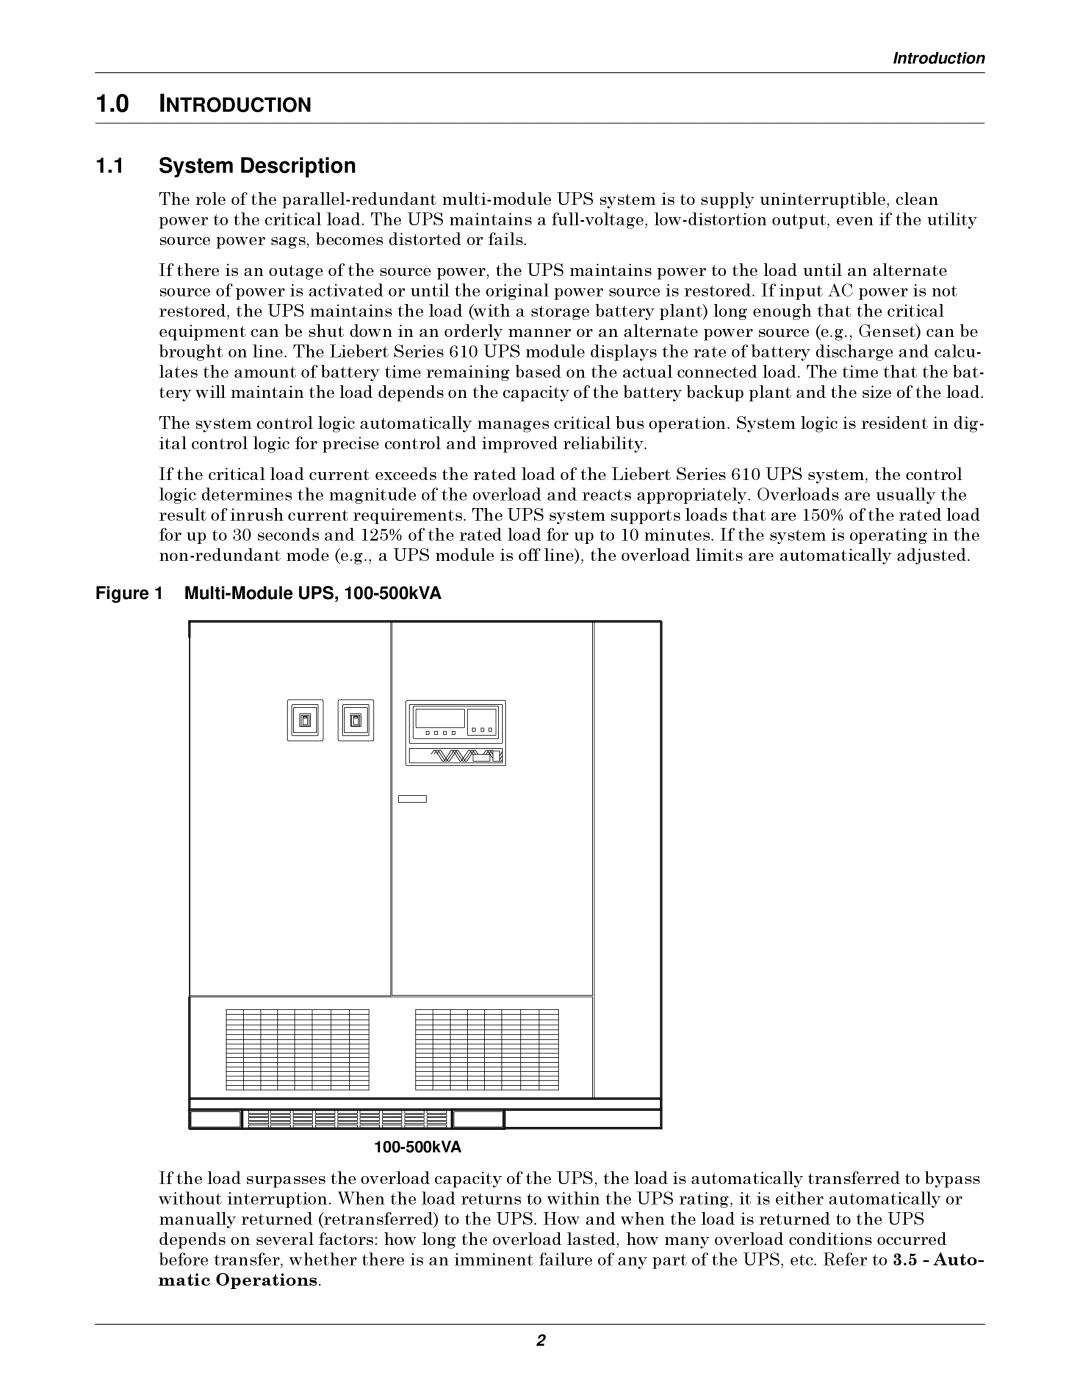 Emerson Series 610 manual System Description, Introduction, Multi-Module UPS, 100-500kVA 